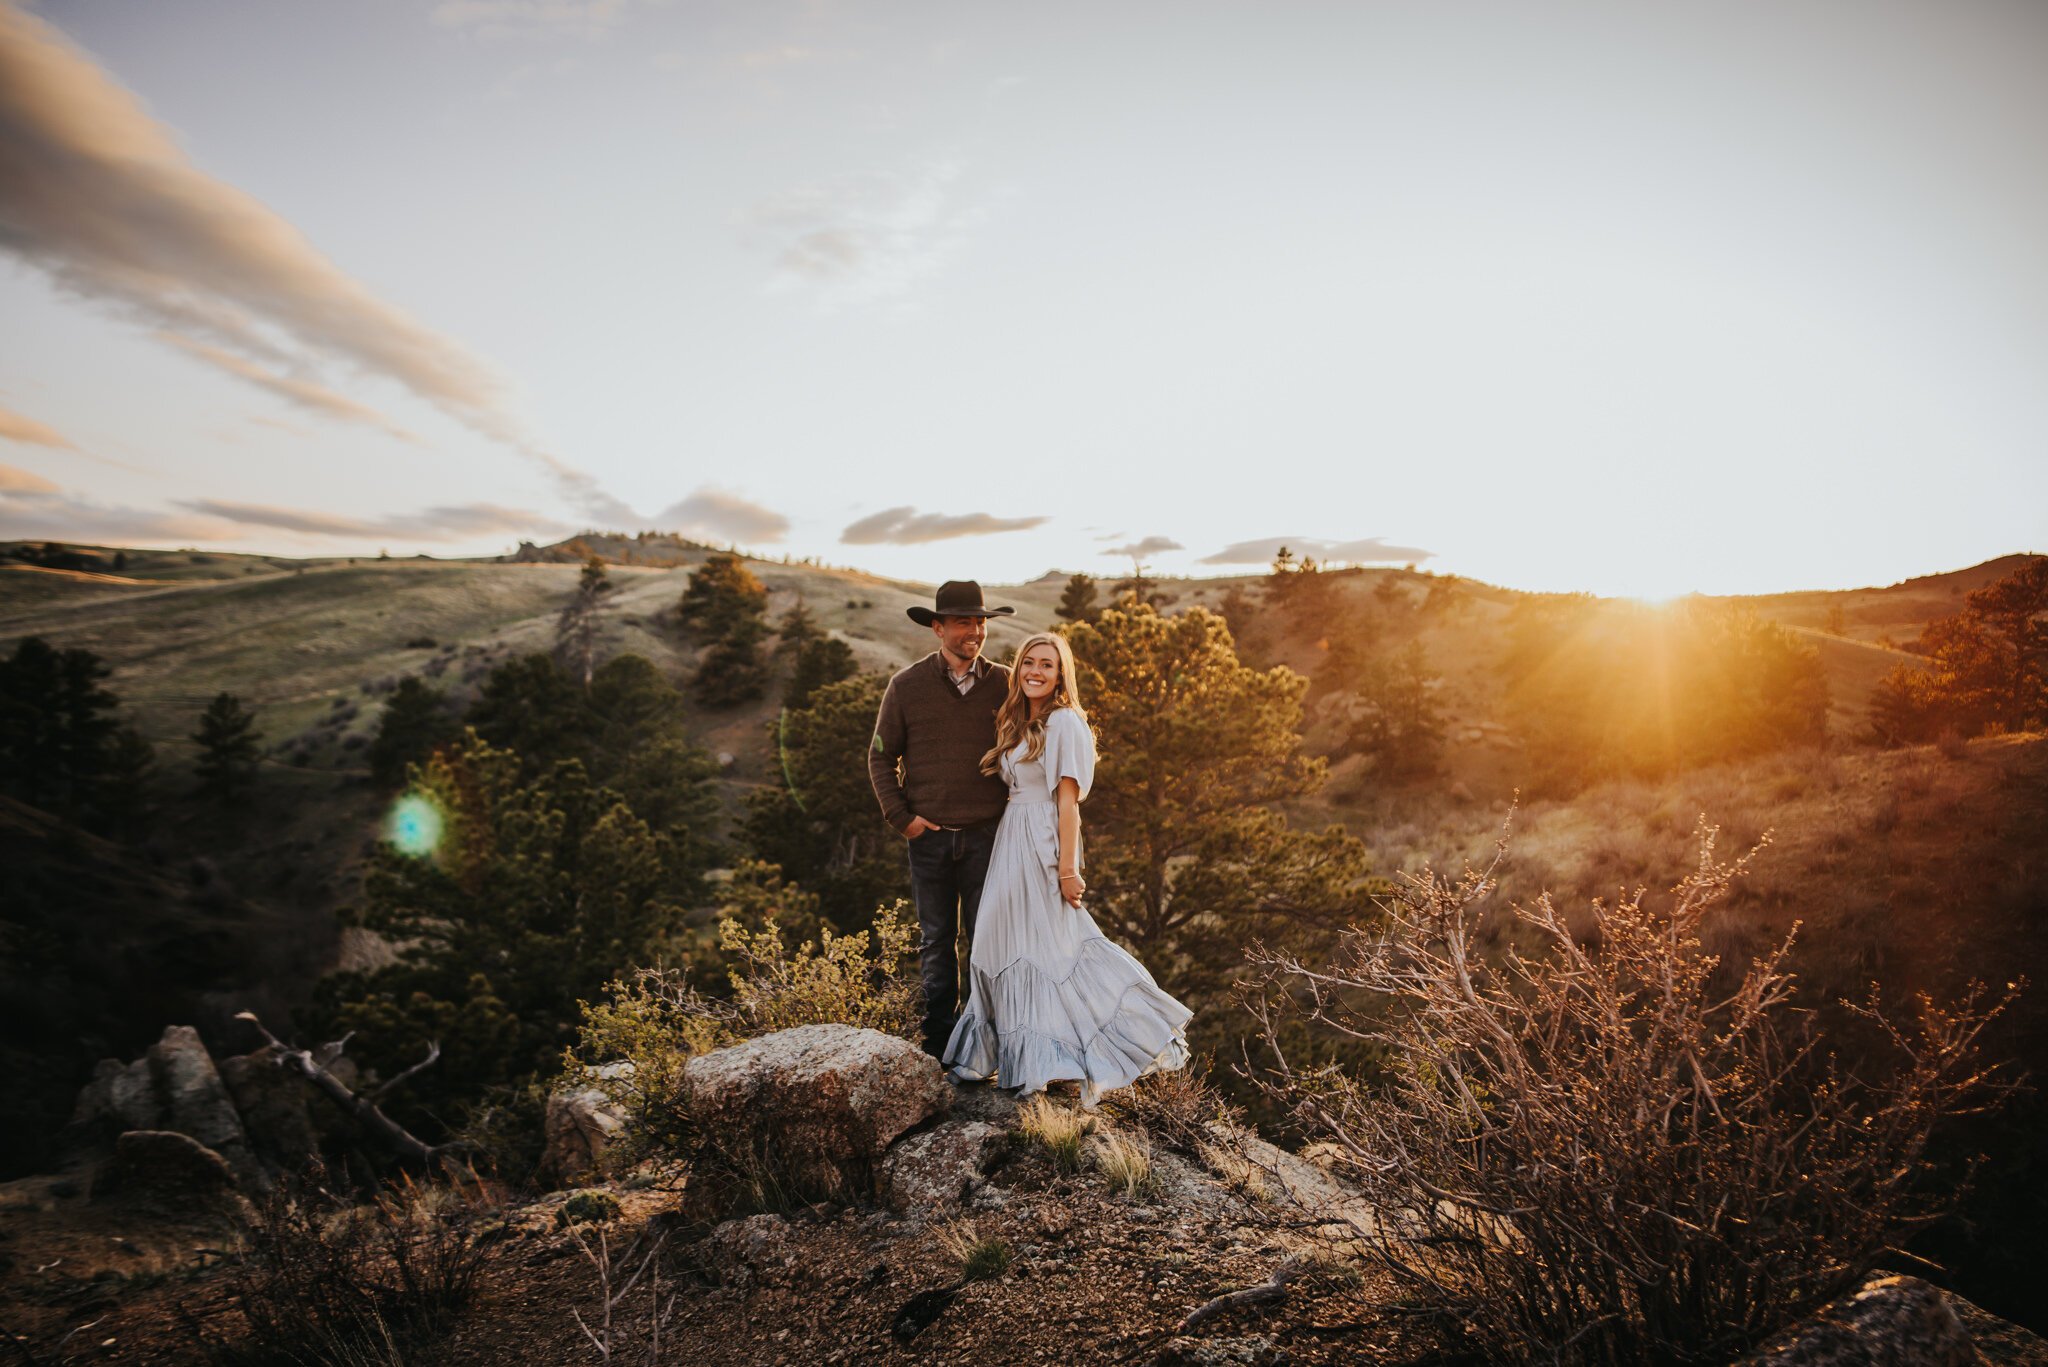 Shelby+and+Brady+Engagement+Session+Cheyenne+Wyoming+Sunset+Water+Fields+Rocks+Nature+Colorado+Photographer+Wild+Prairie+Photography-28-2020.jpeg